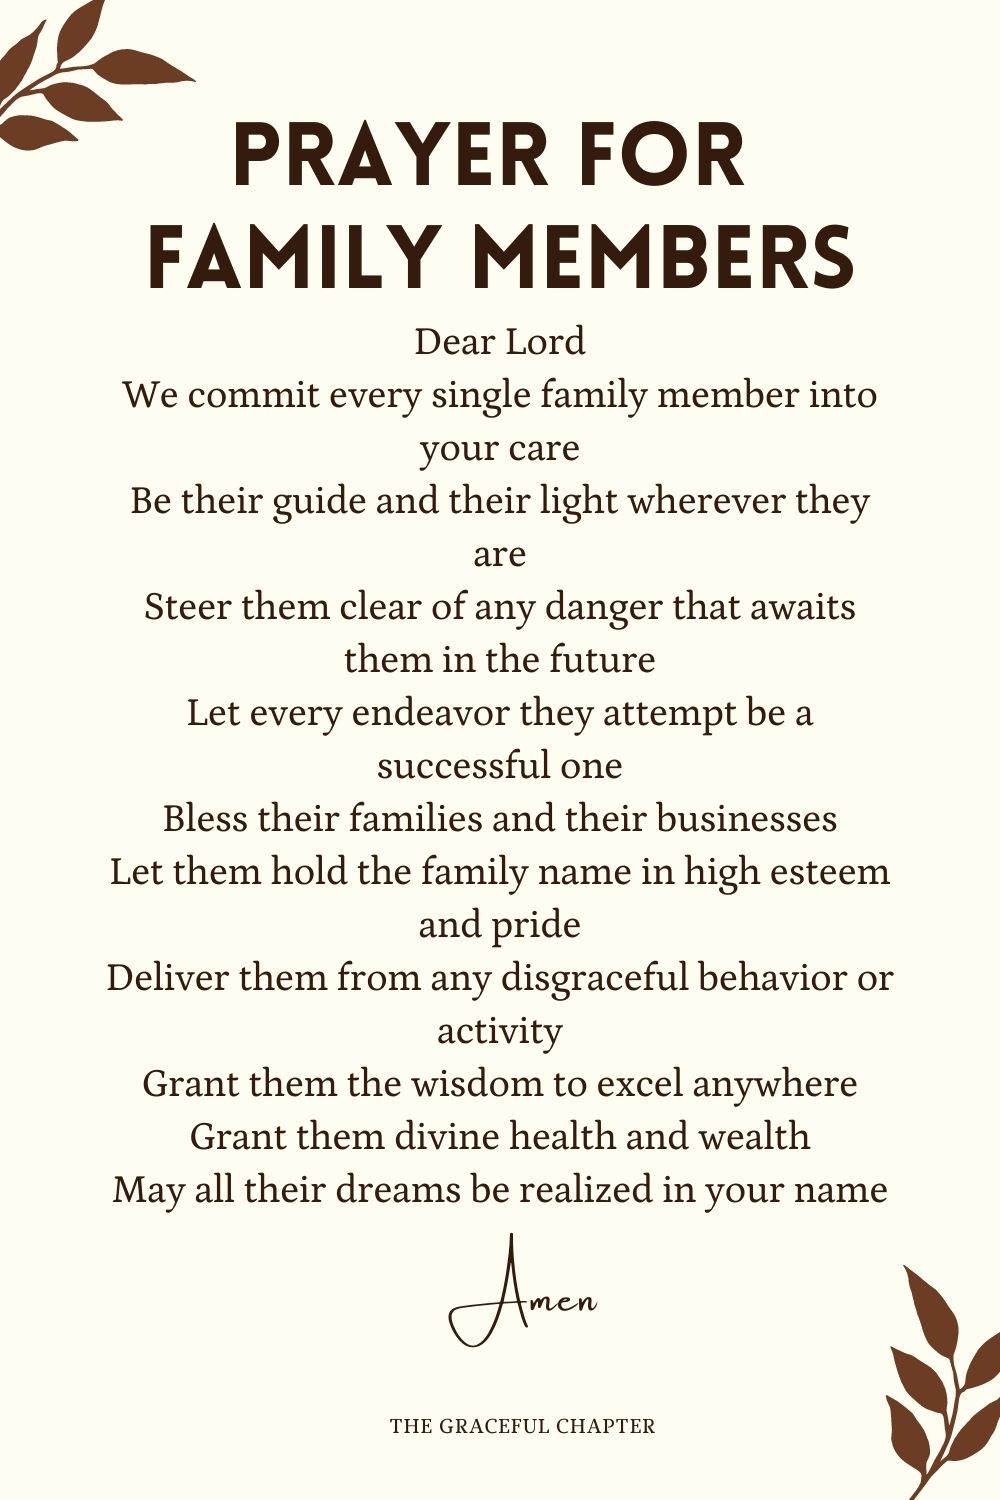 Prayer for Family Members - prayers for your family